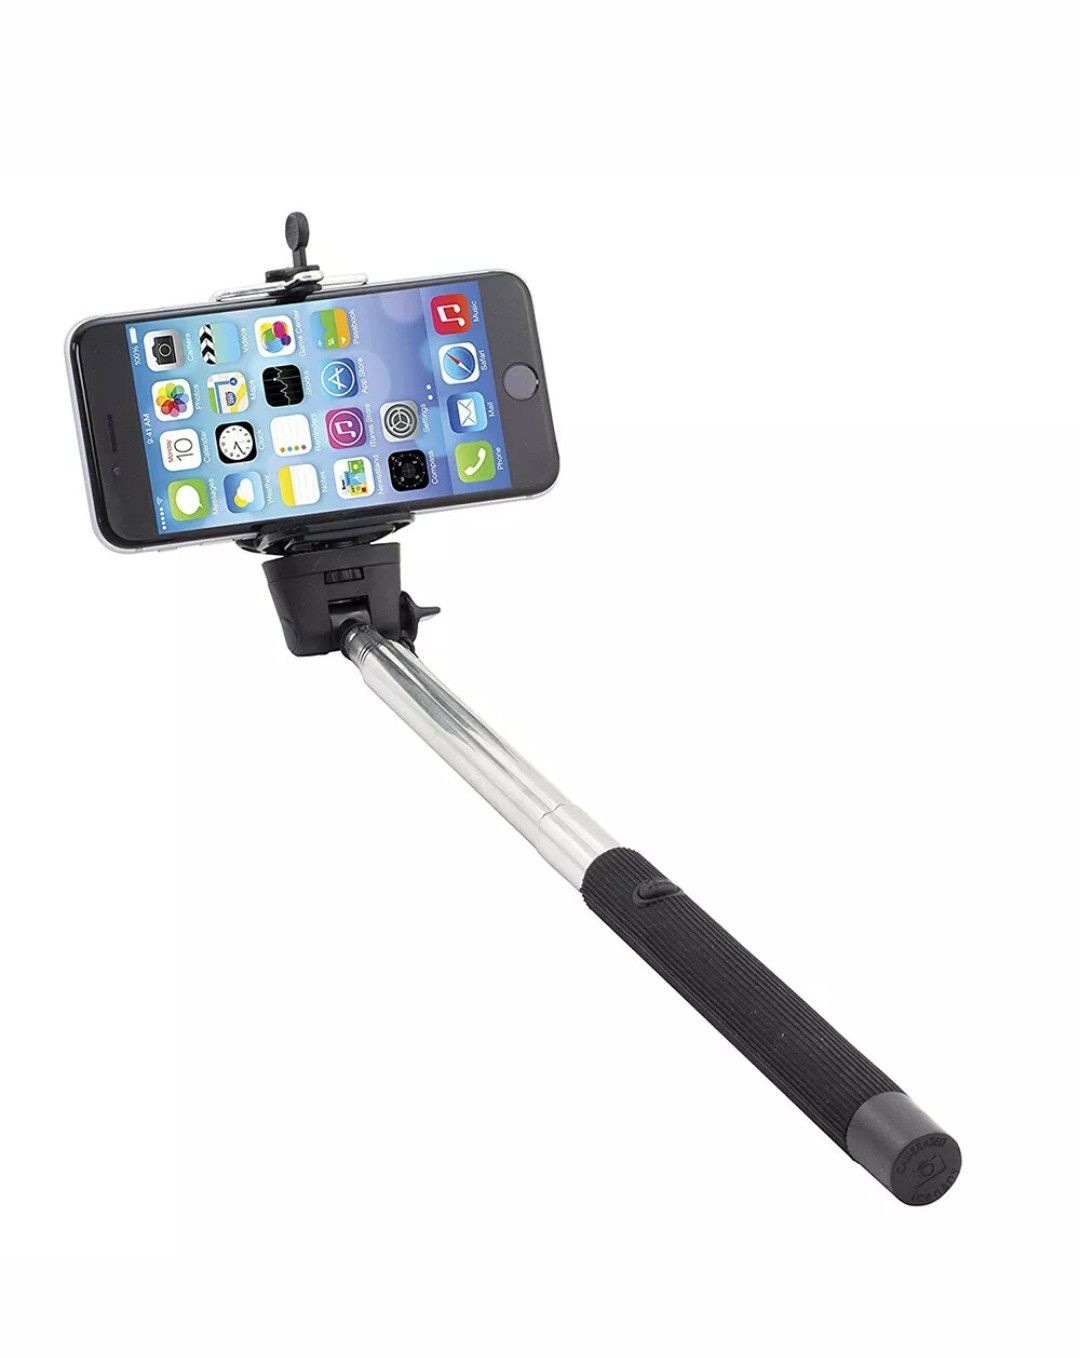 Bluetooth Selfie Stick, Extendable Monopod with Built-in Shutter